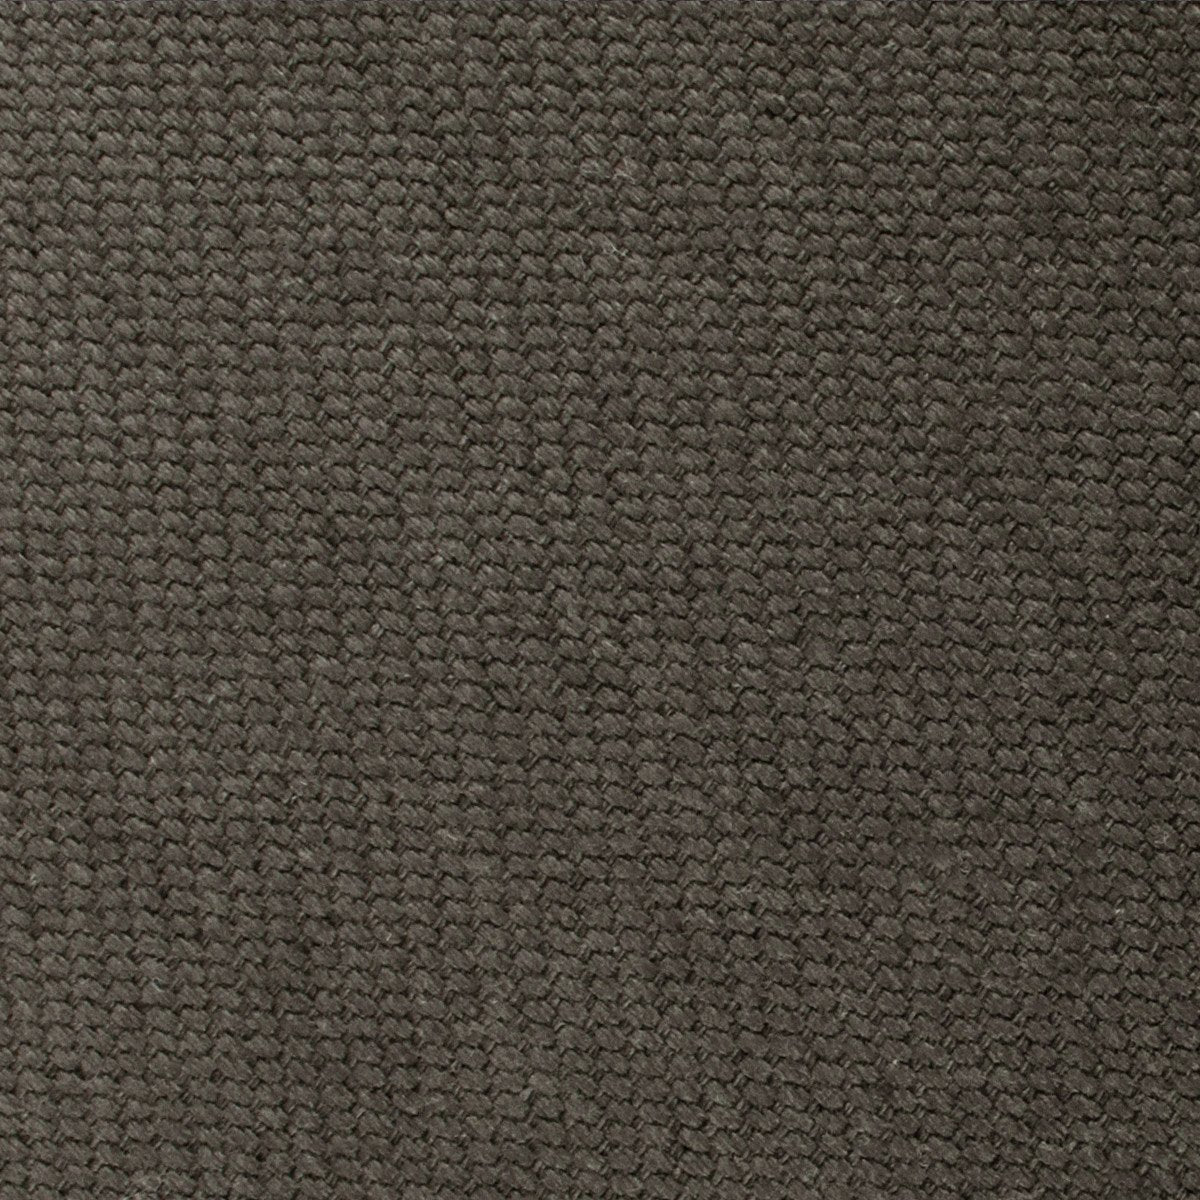 Paros Charcoal Linen Necktie Fabric